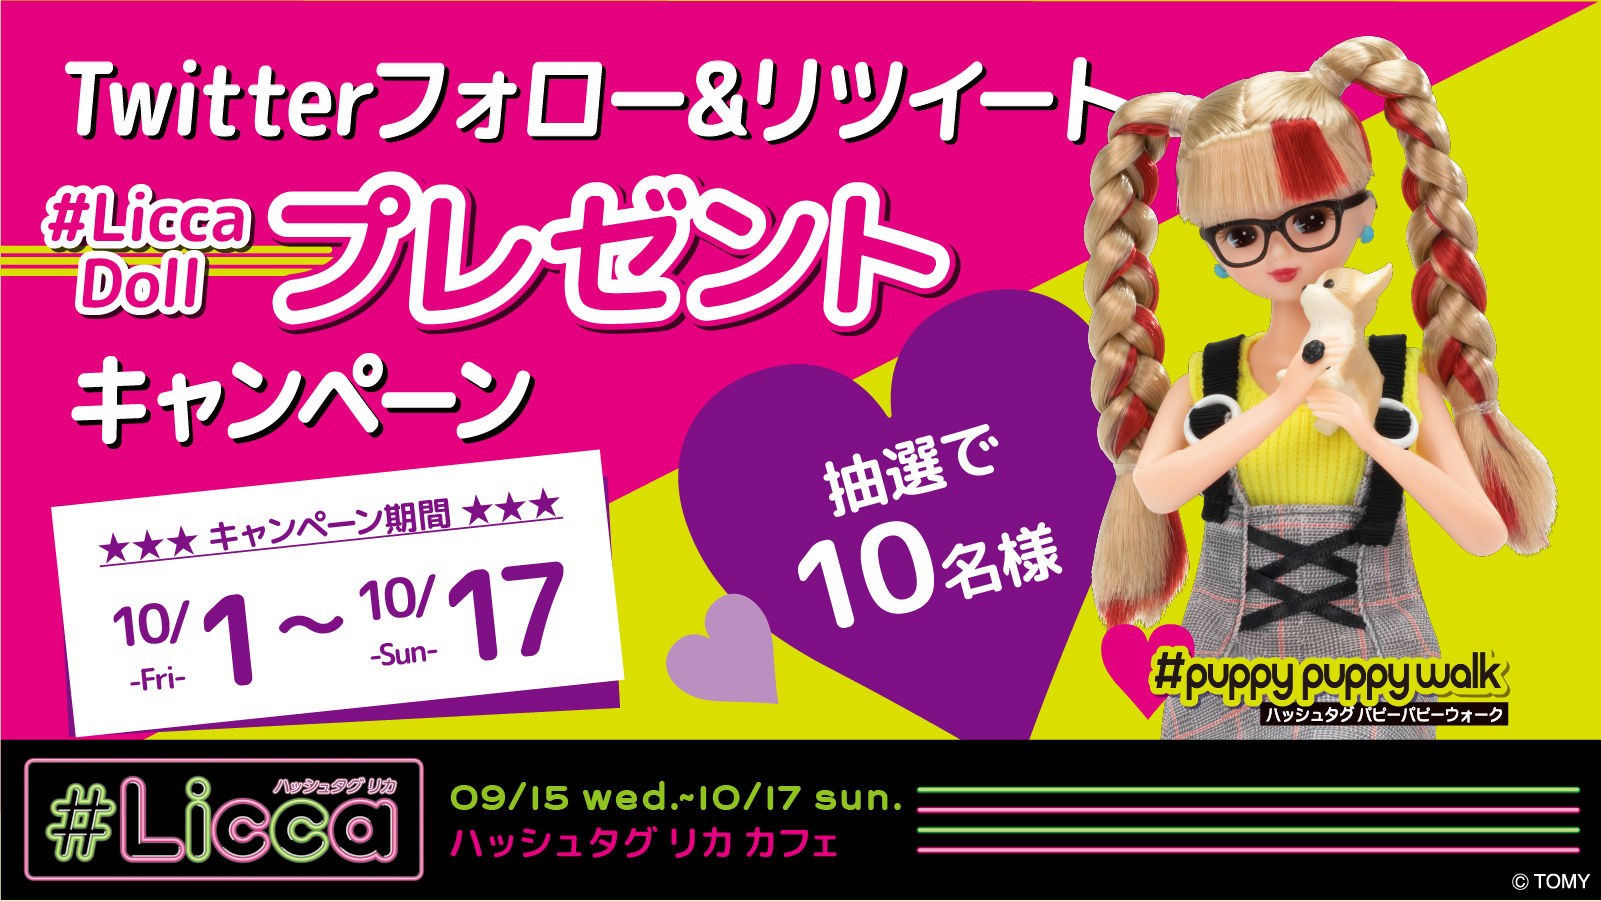 Season & Co. on Twitter: "☆#Liccaドールプレゼントキャンペーン☆ 10月の新商品販売を記念して＃パピーパピー